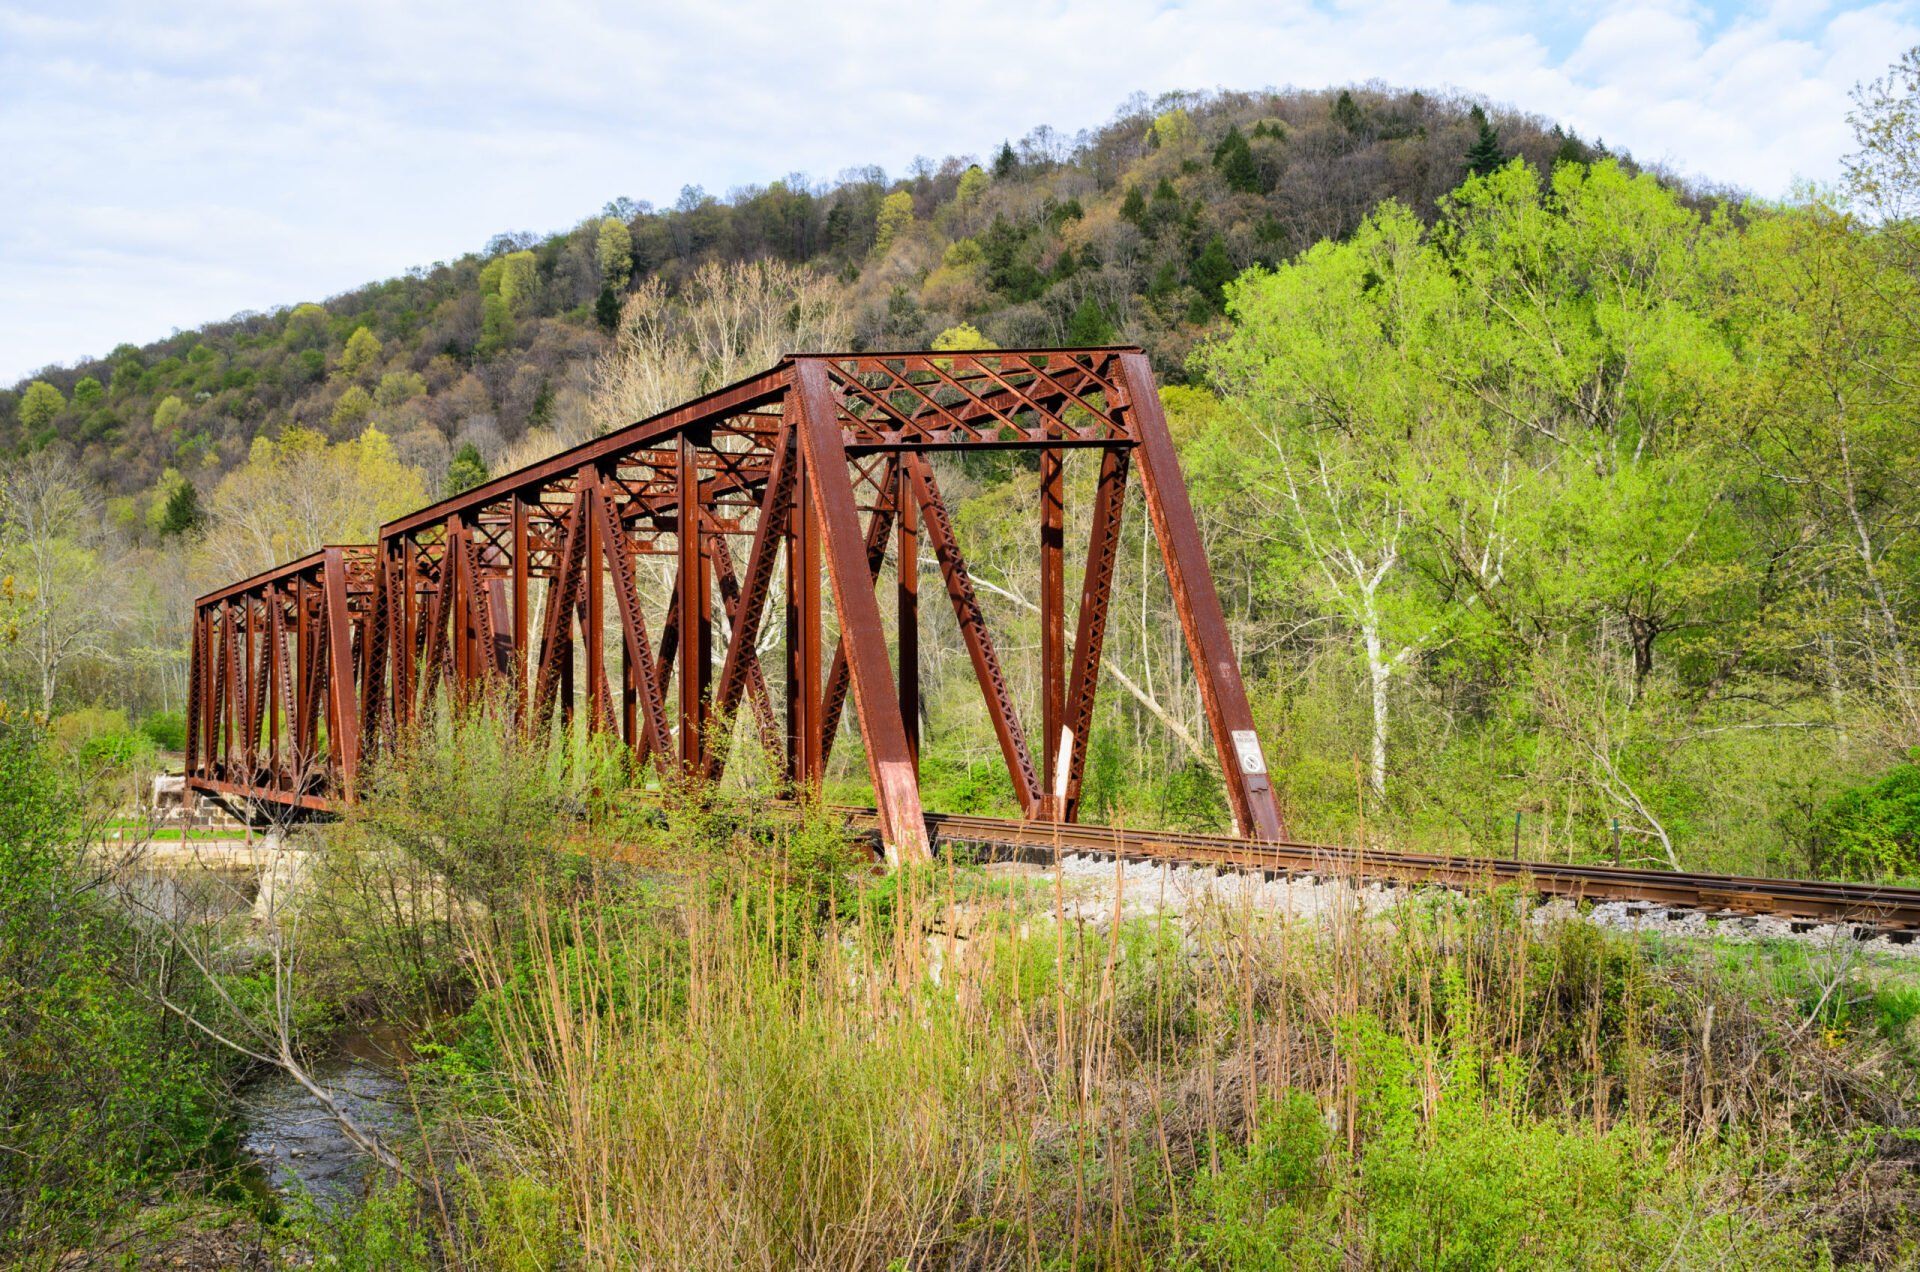 A railroad bridge in Venango County